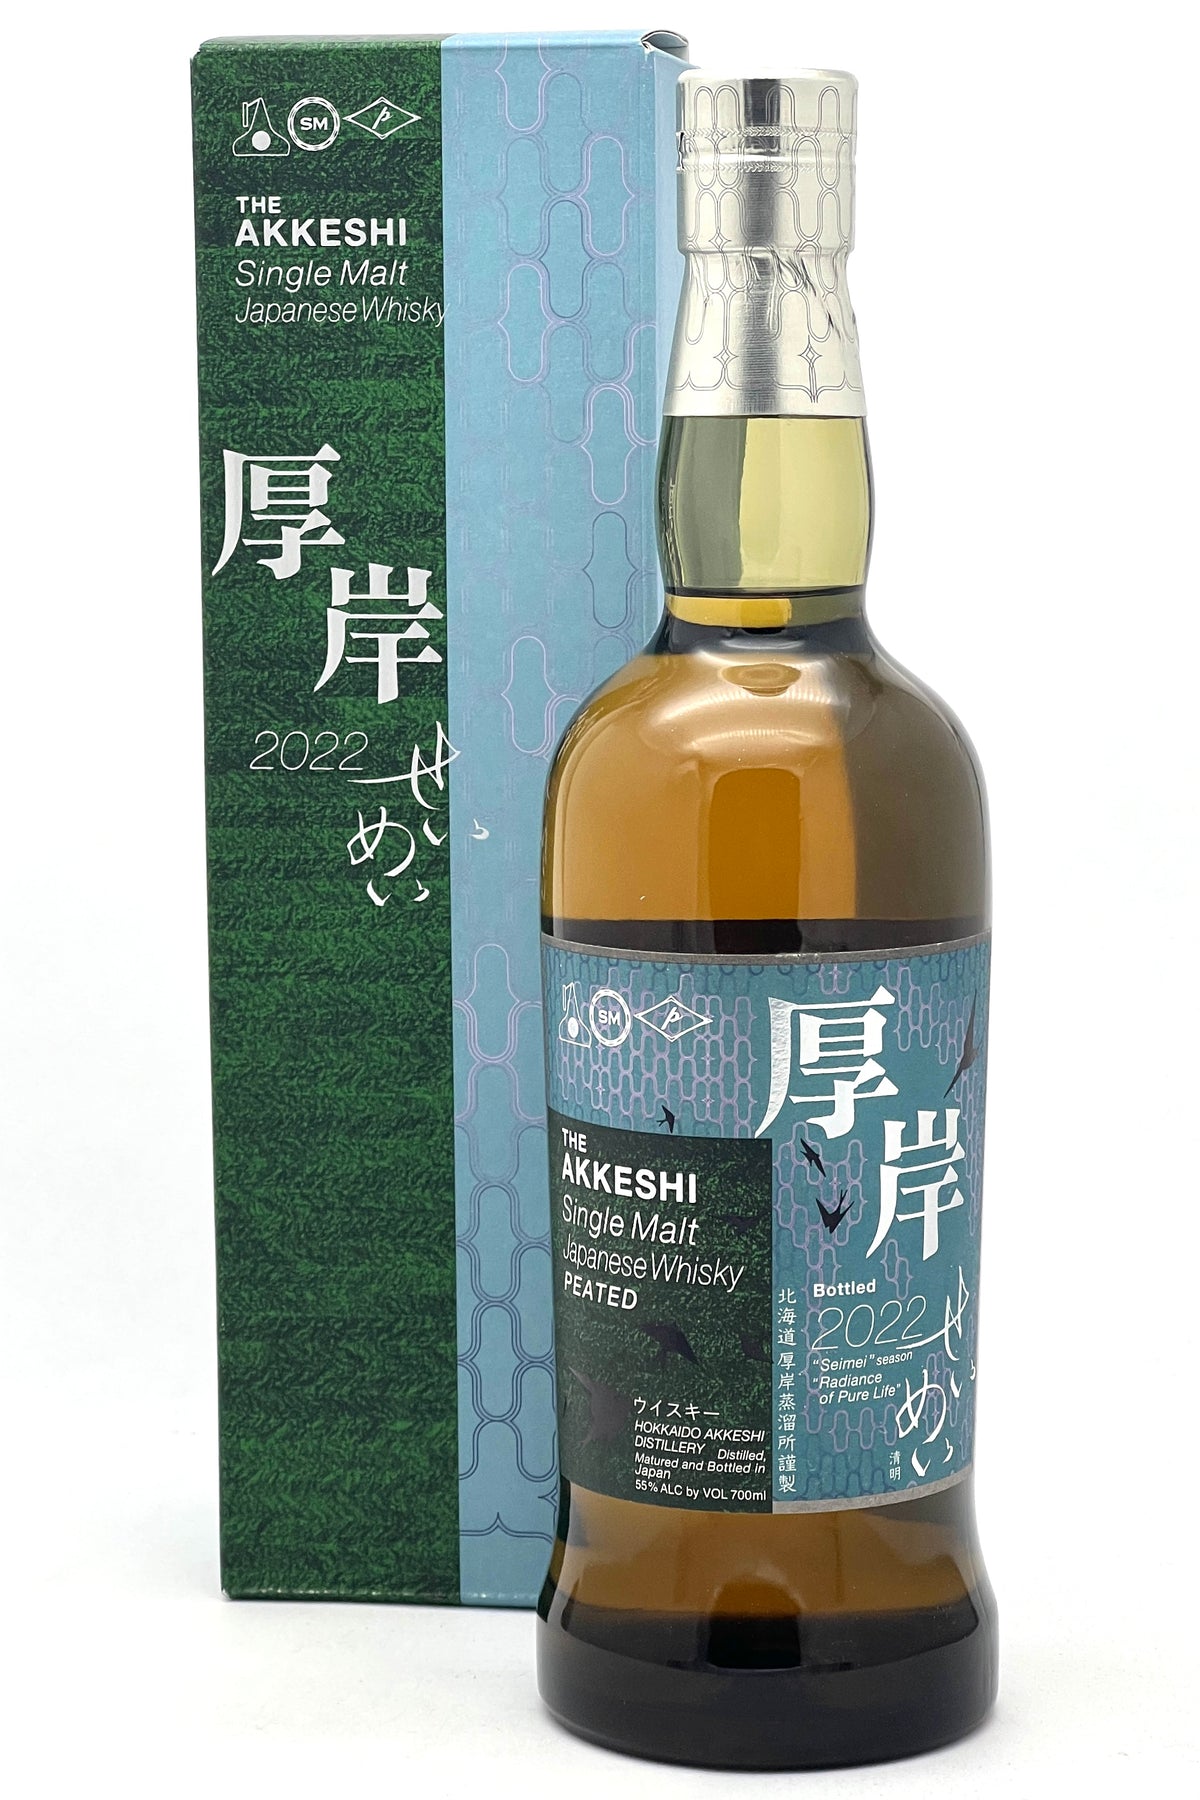 Akkeshi Seimei Radiance of Pure Life 2022 Limited Release Single Malt Japanese Whisky